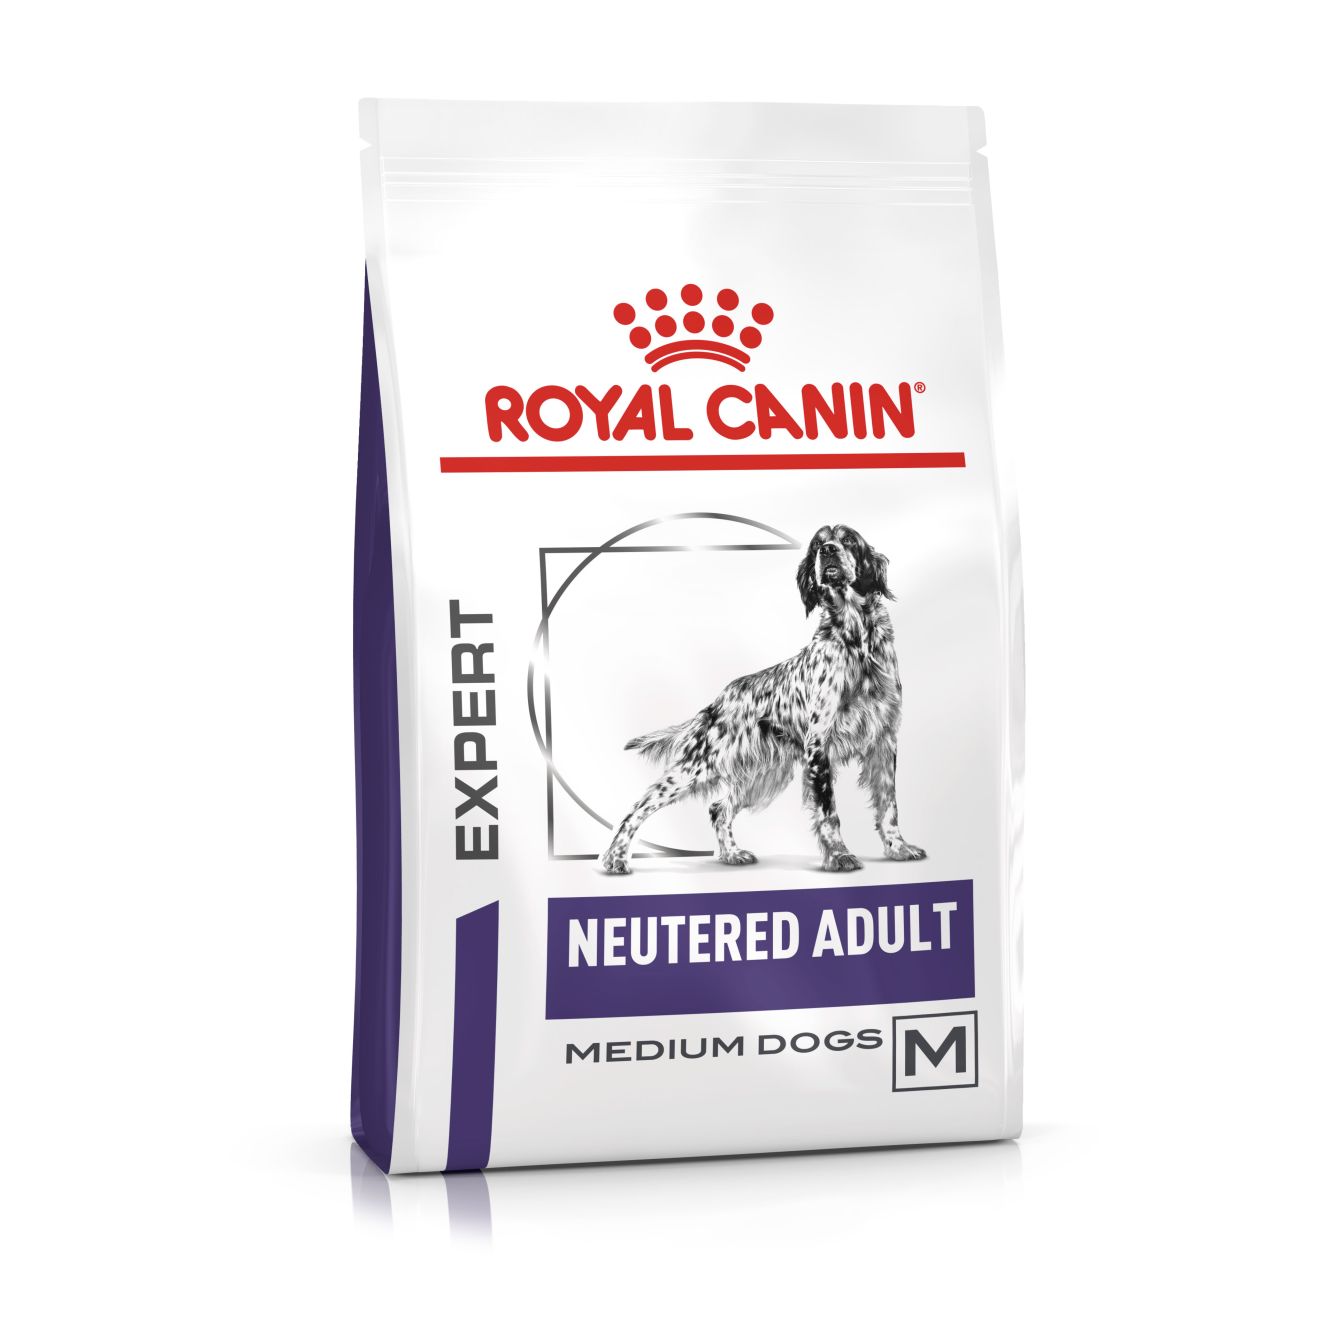 Royal Canin Neutered Adult Medium Dogs Trockenfutter Hund 